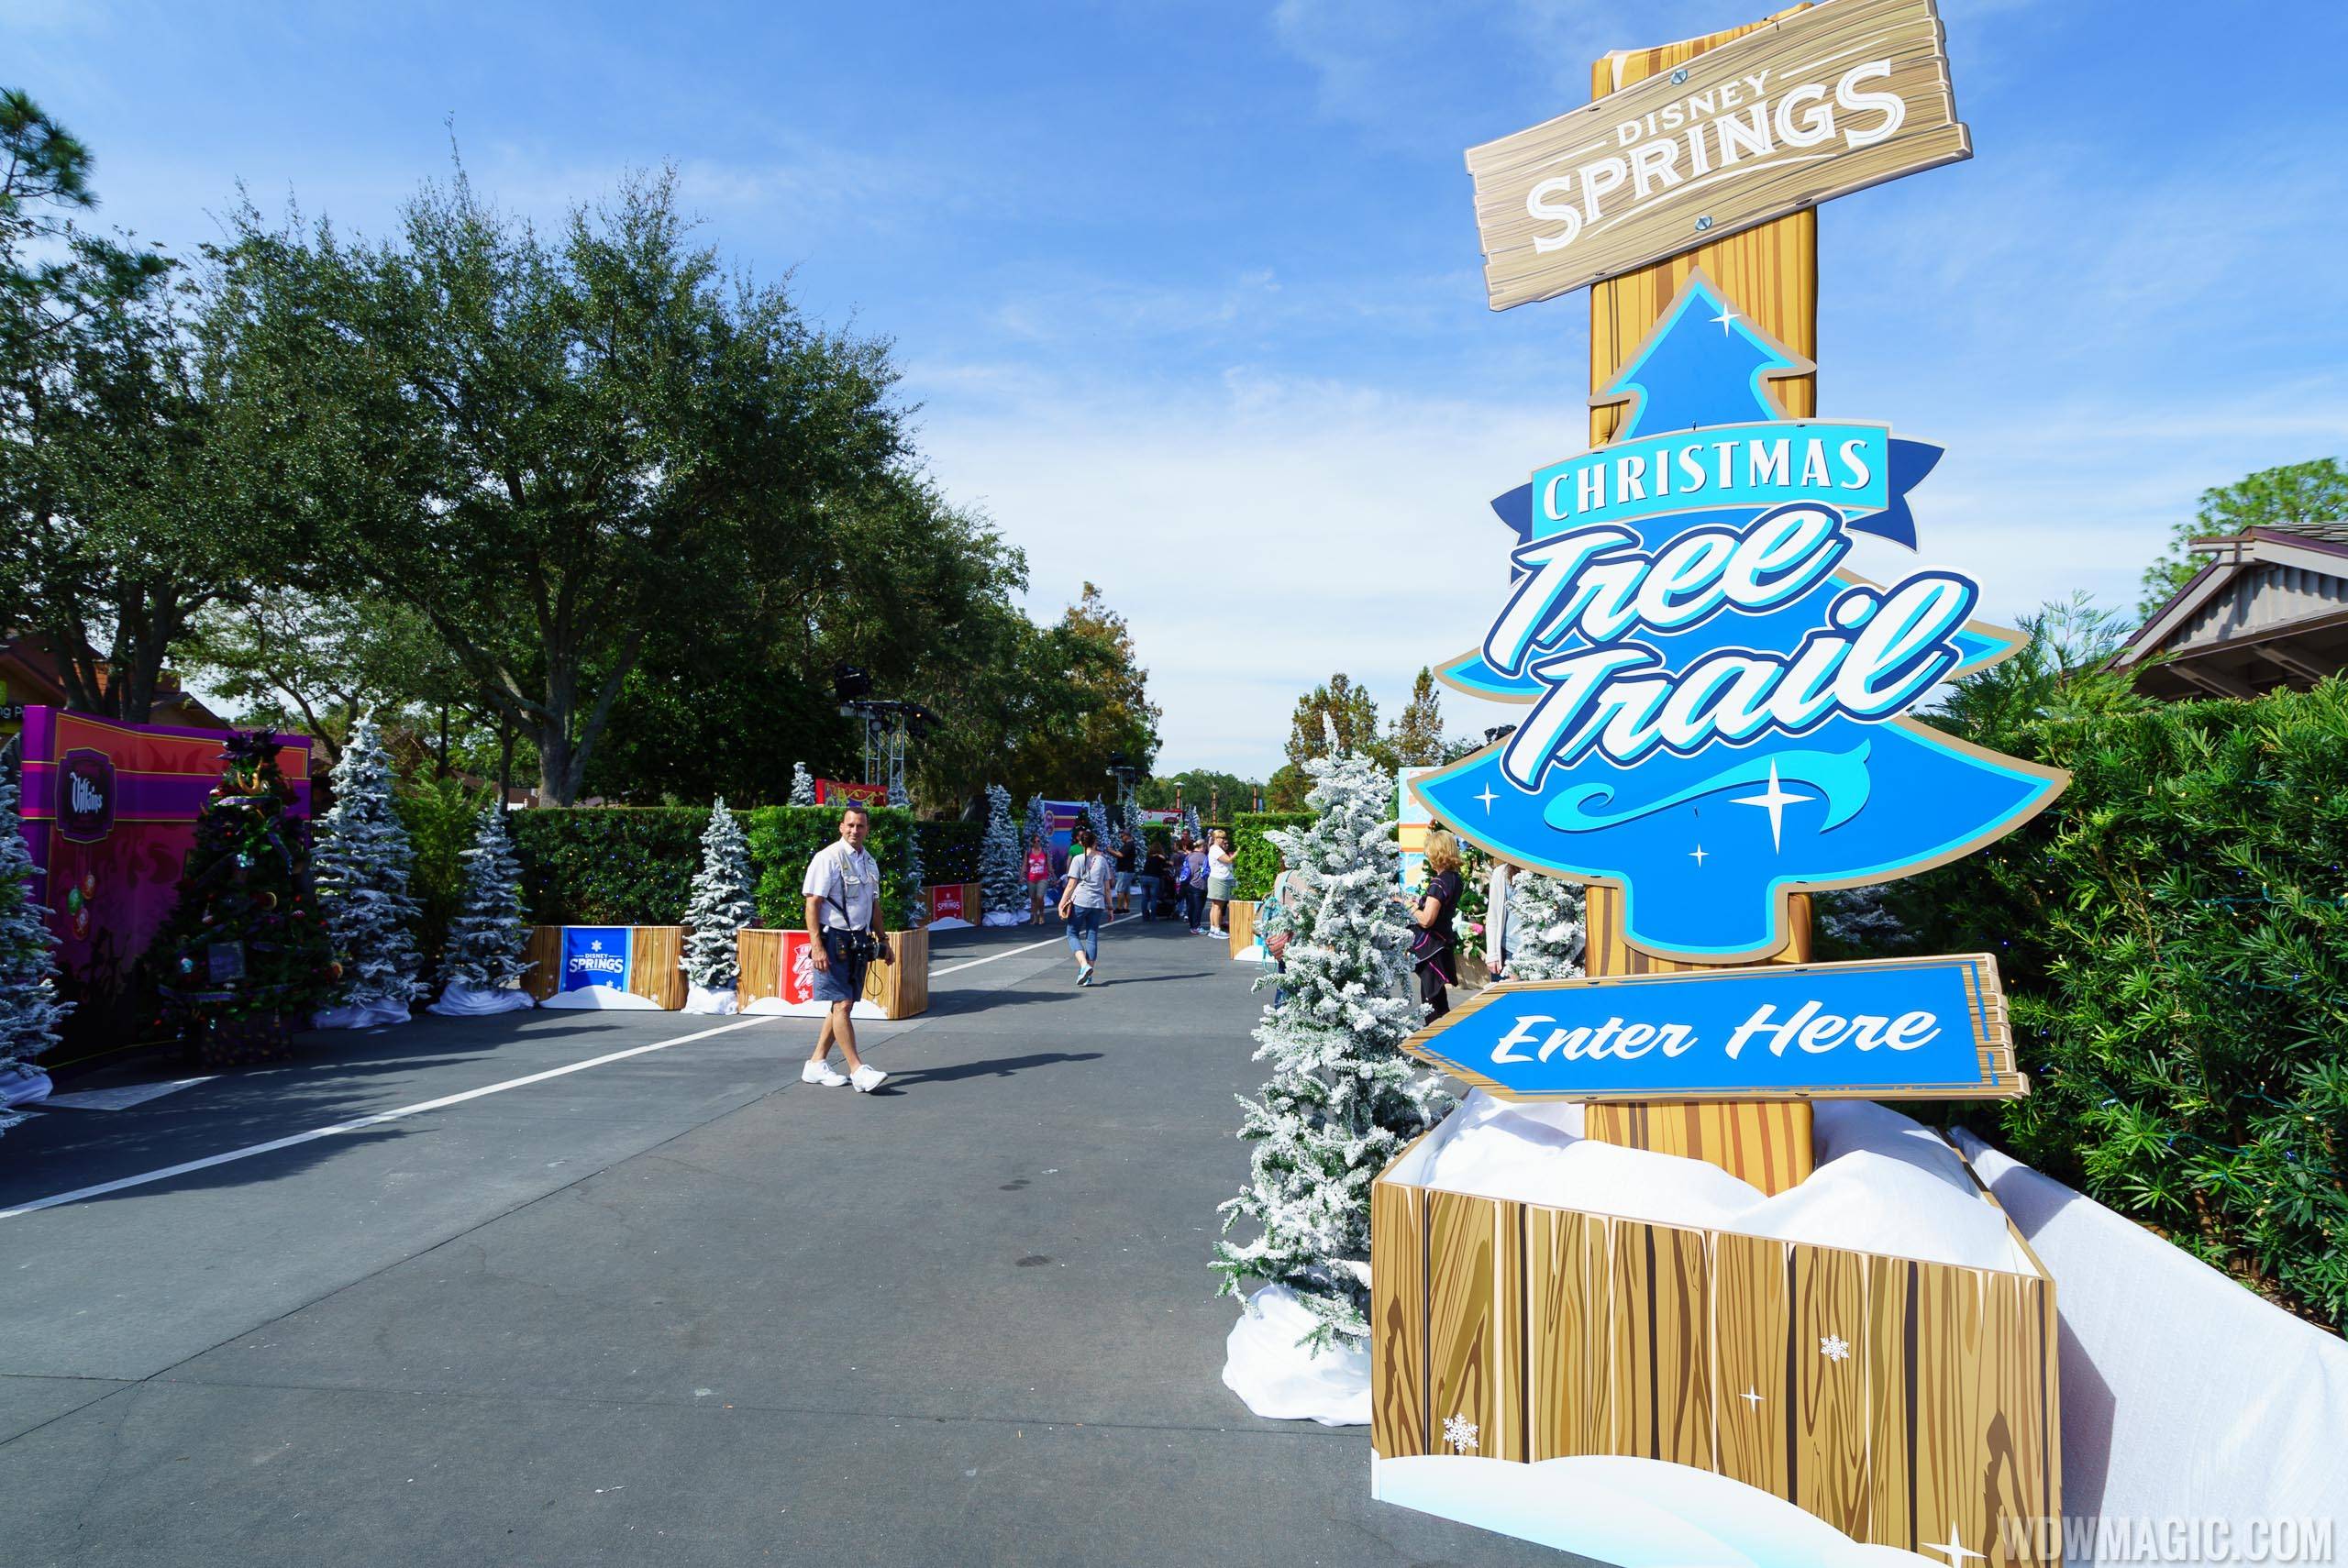 Disney Springs Christmas Tree Trail